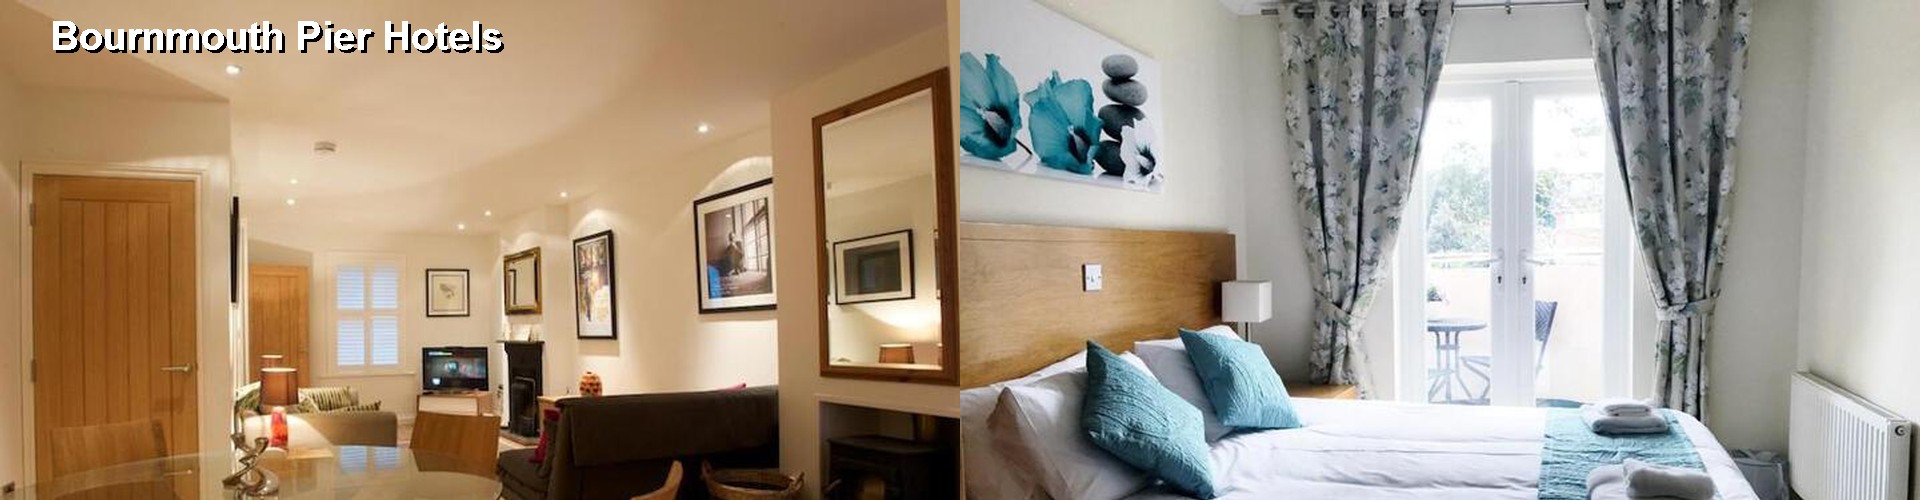 4 Best Hotels near Bournmouth Pier